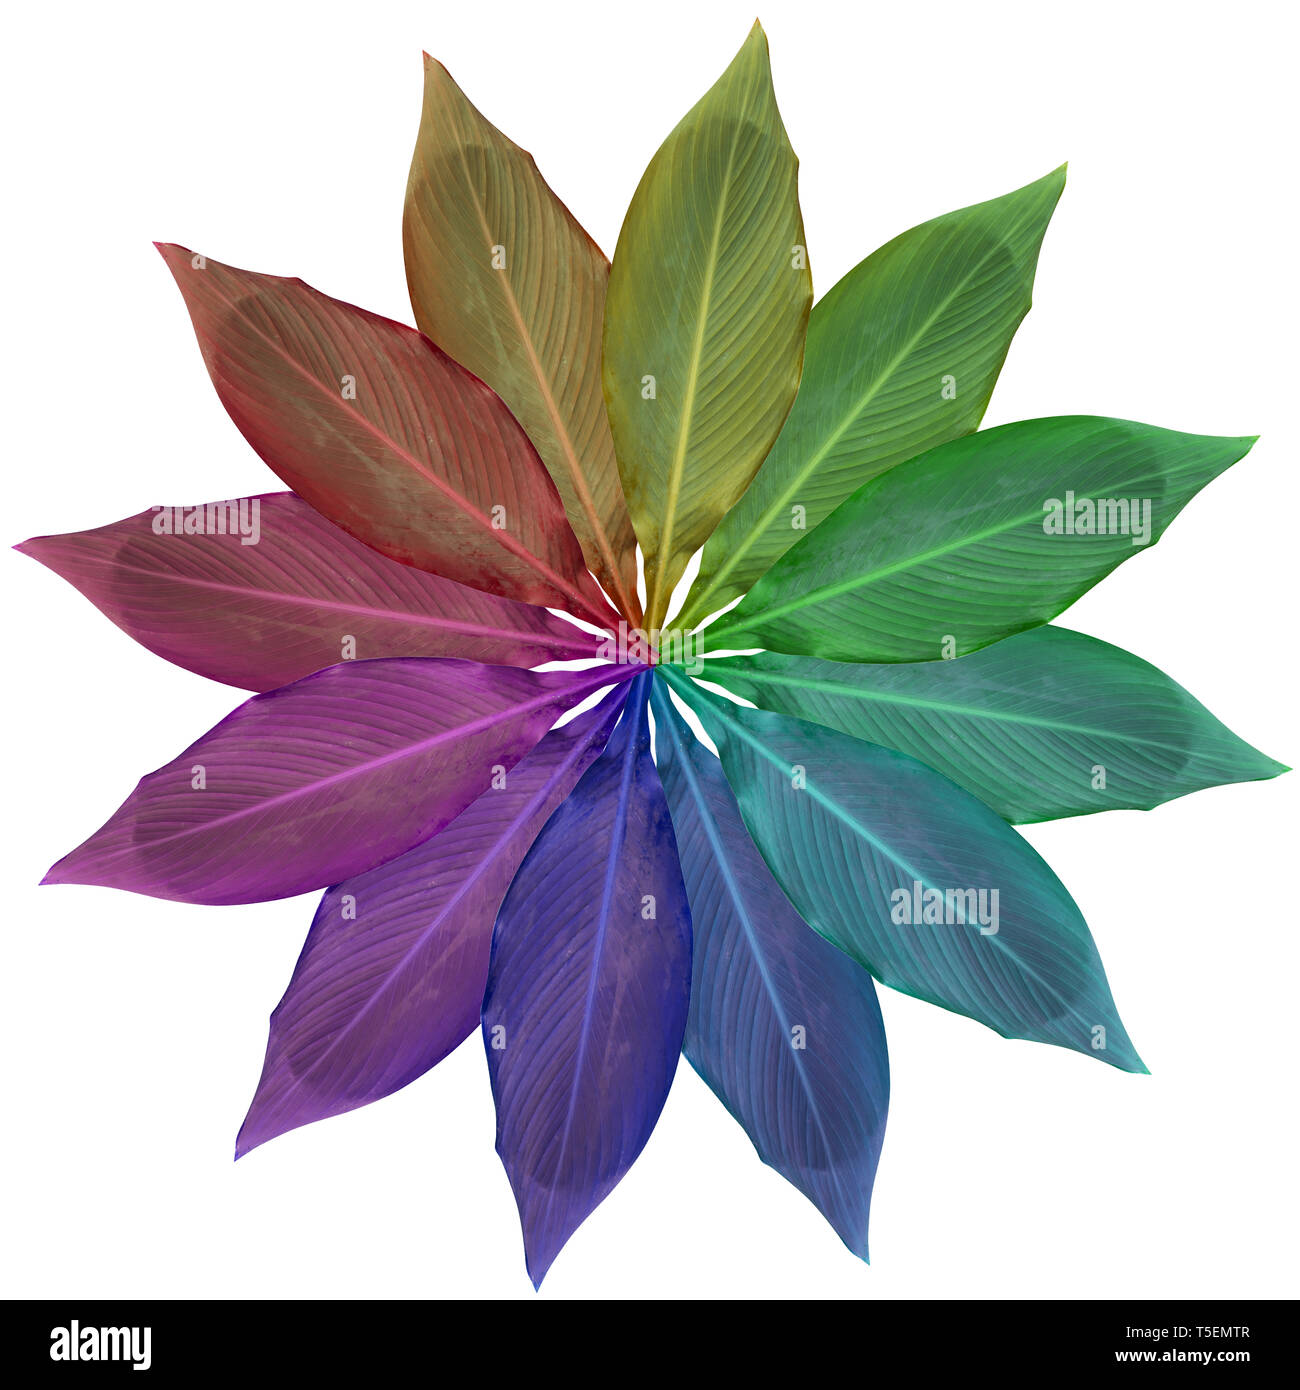 Digitally enhanced image of 12 rainbow coloured leaves arranged in a circular design Stock Photo